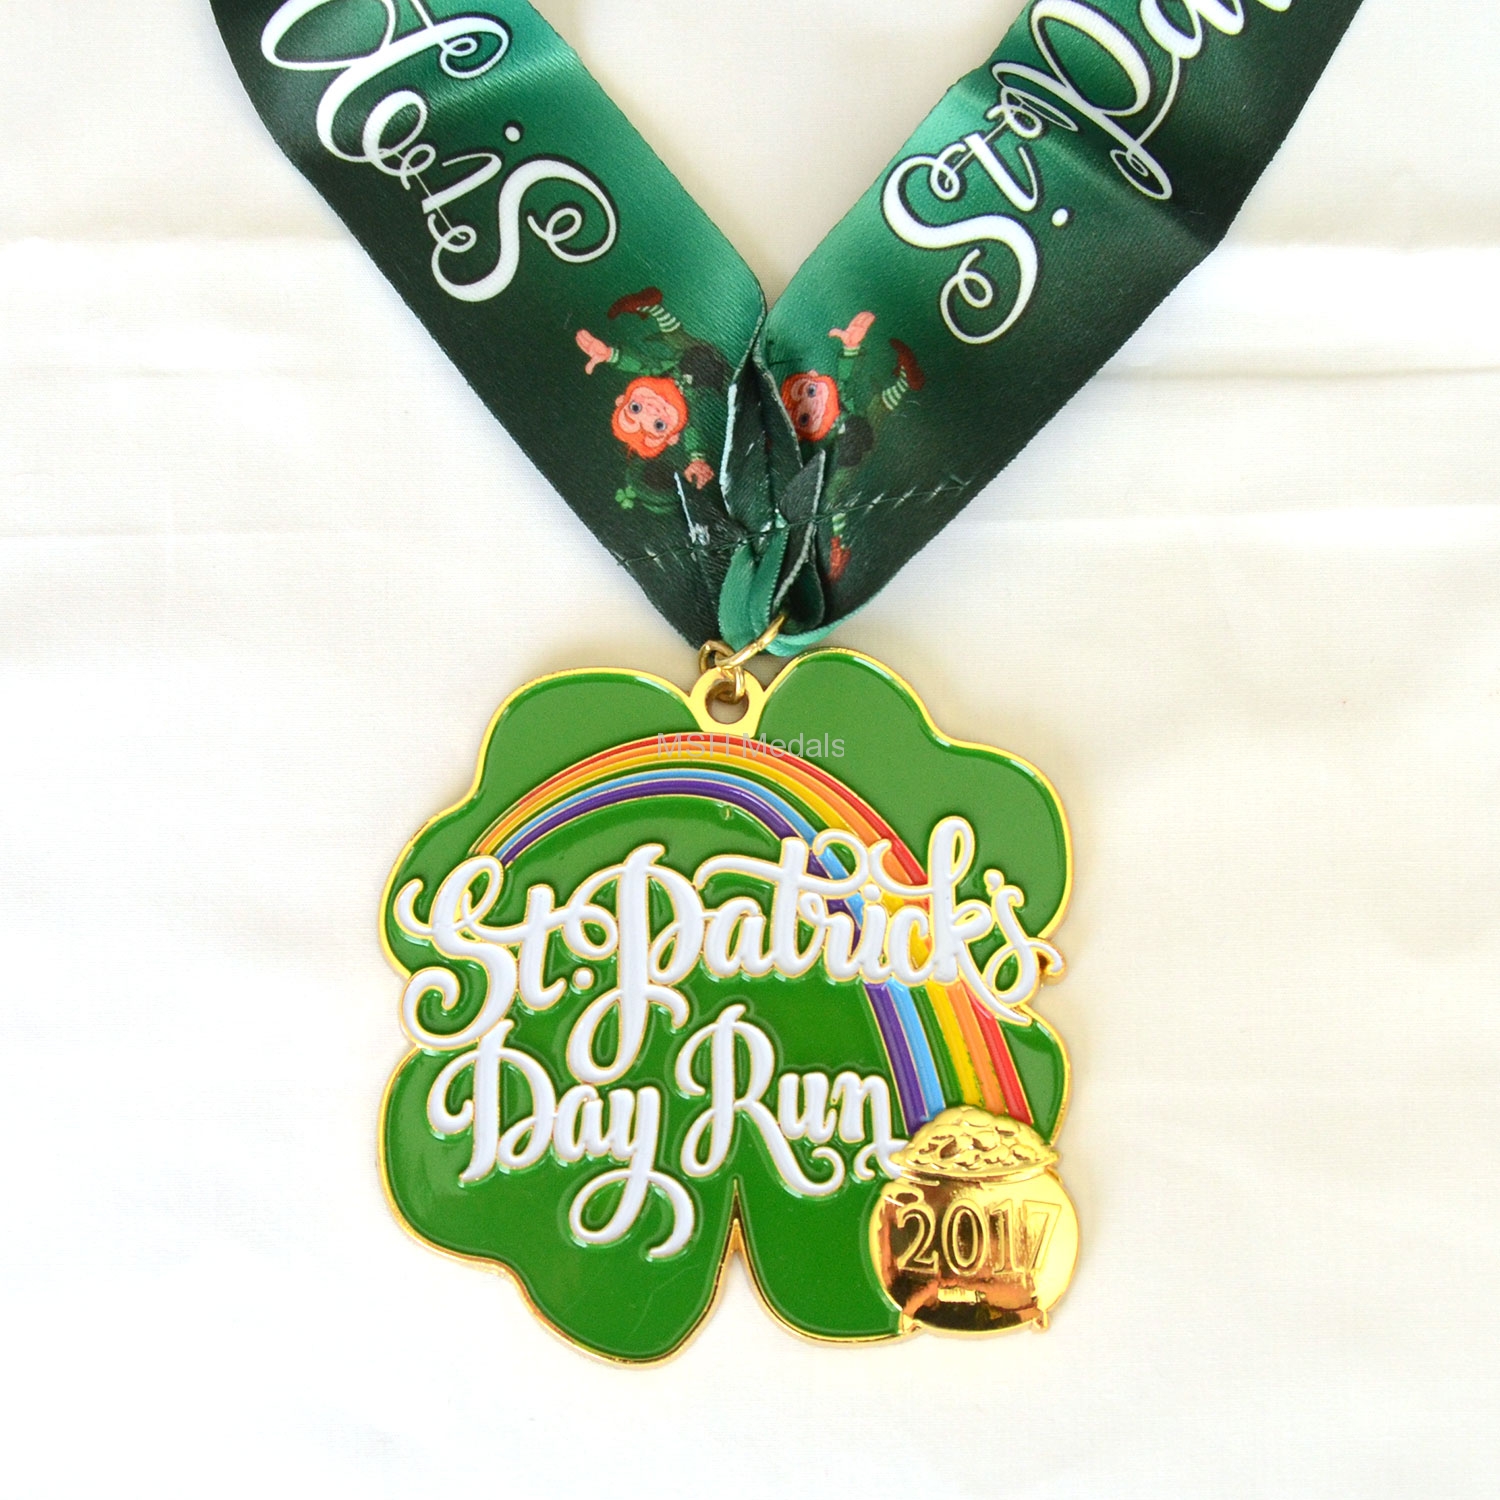 St Patrick's Day run race medal